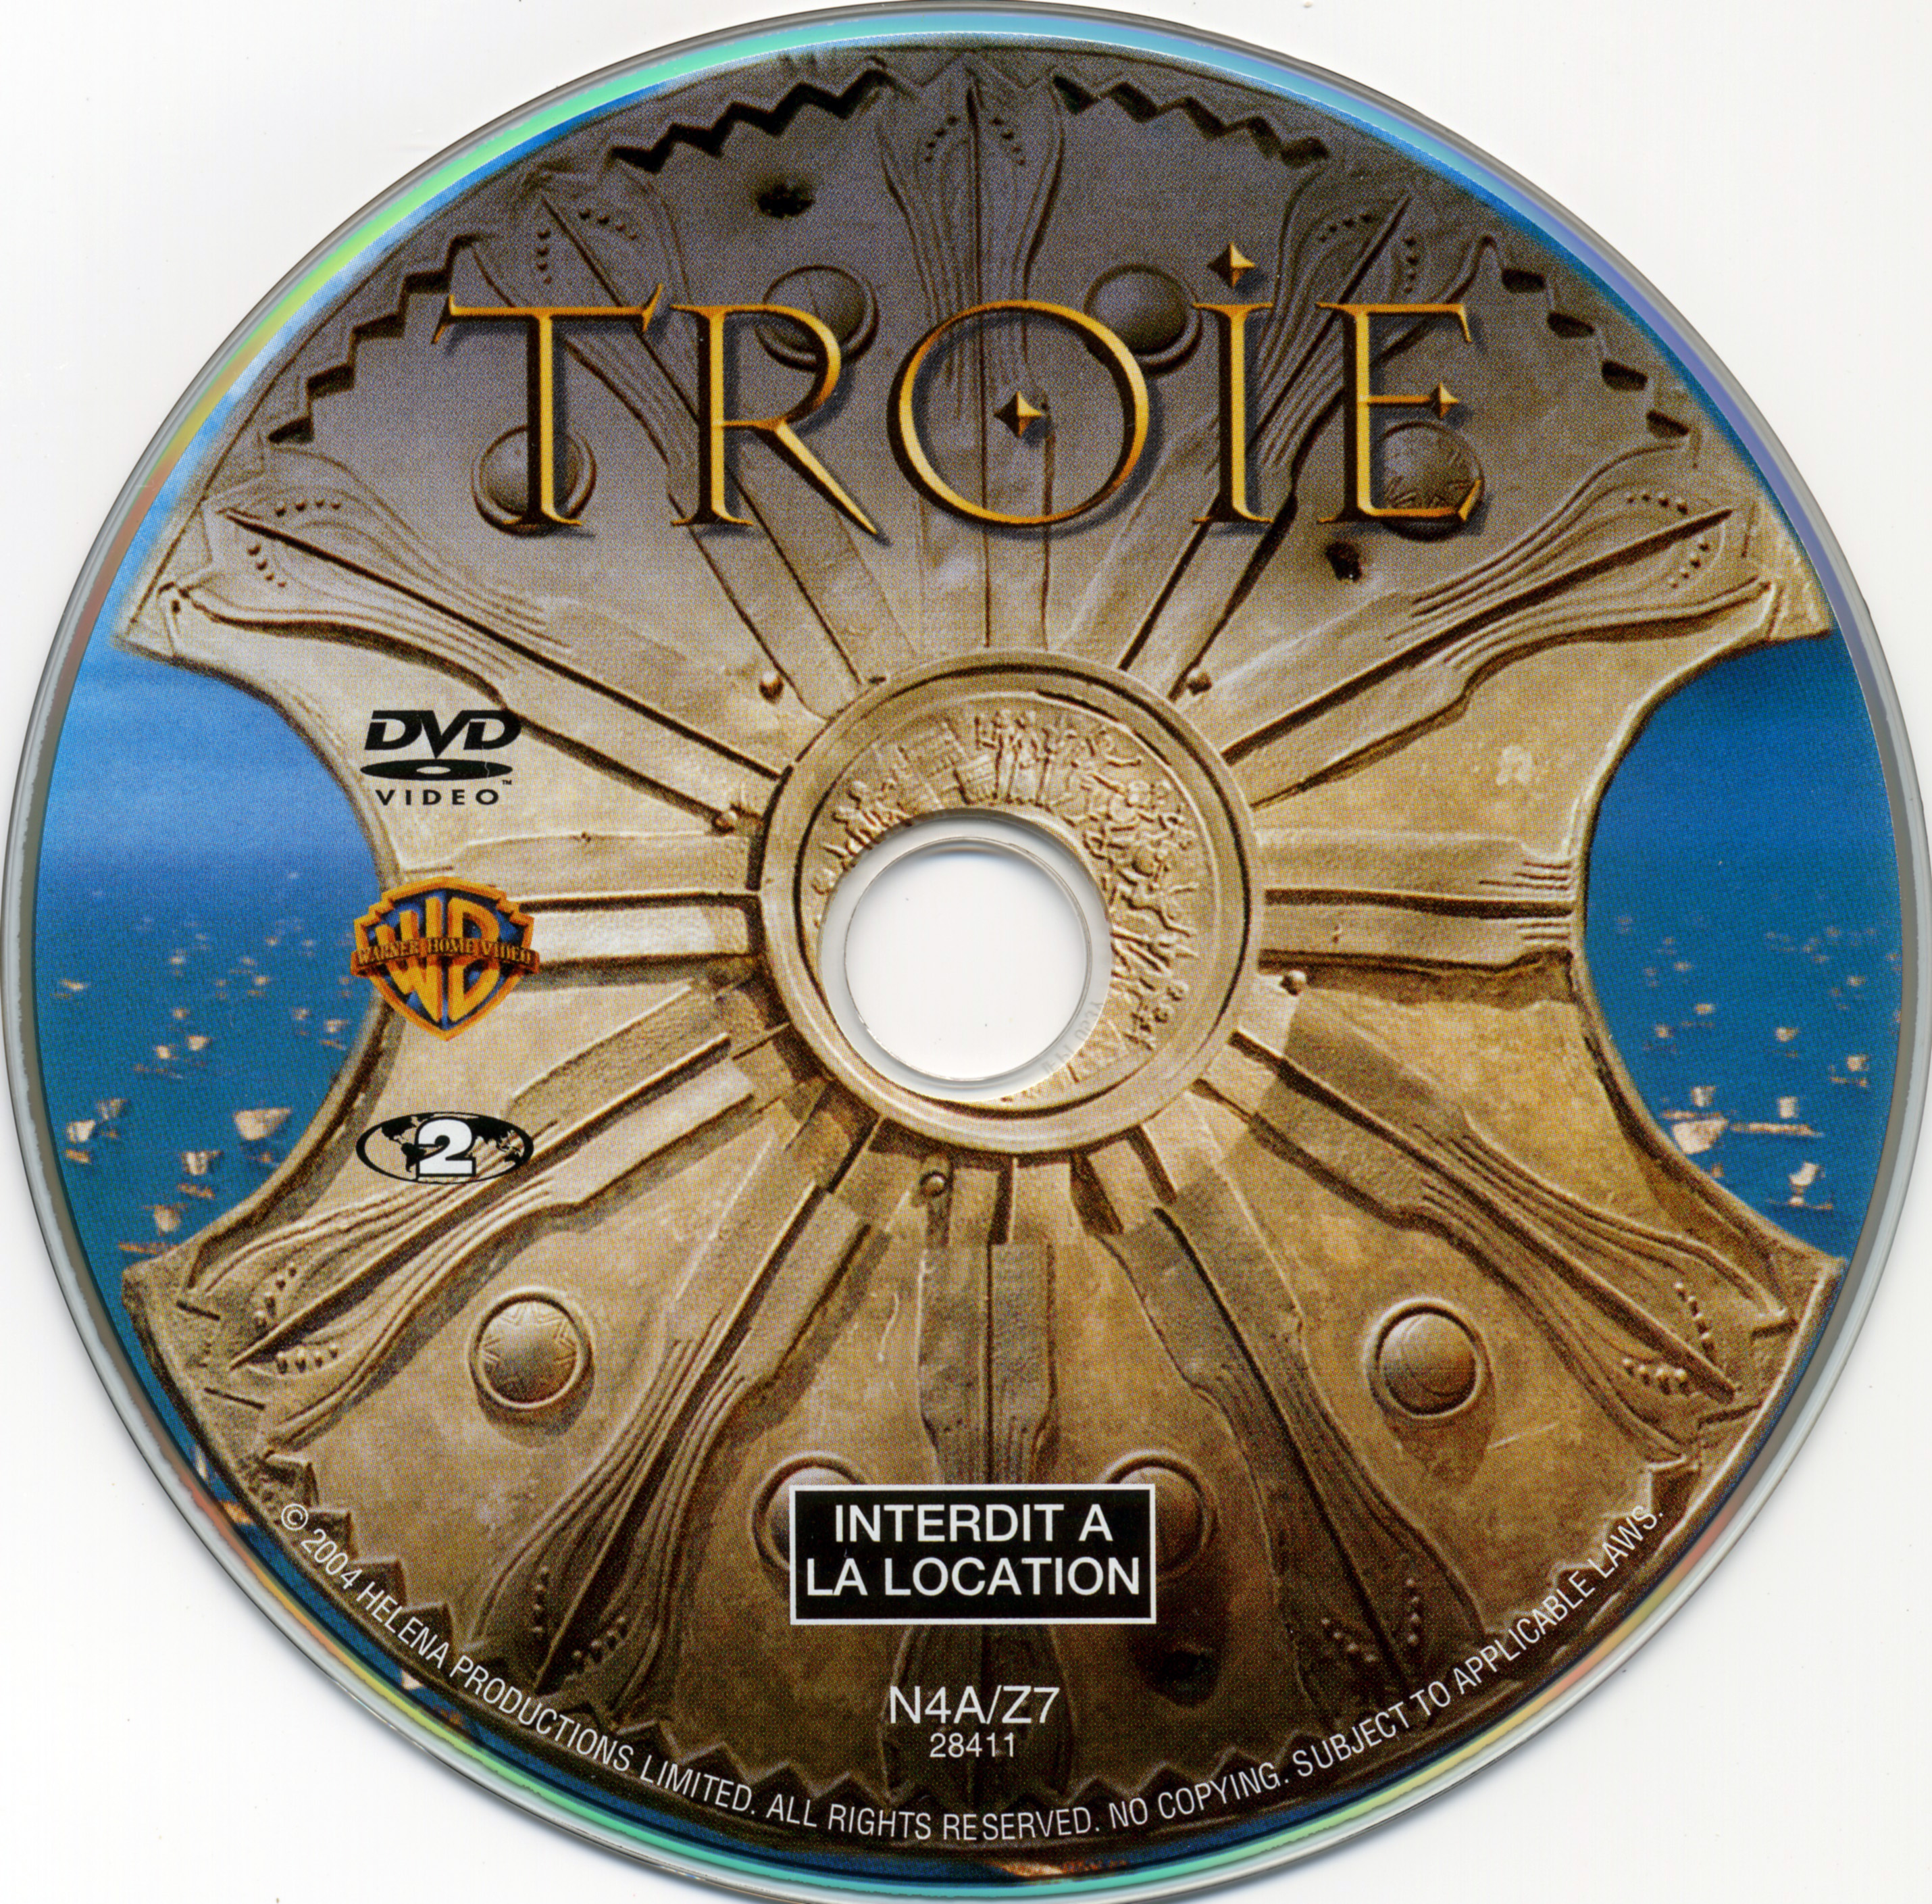 Troie DISC 1